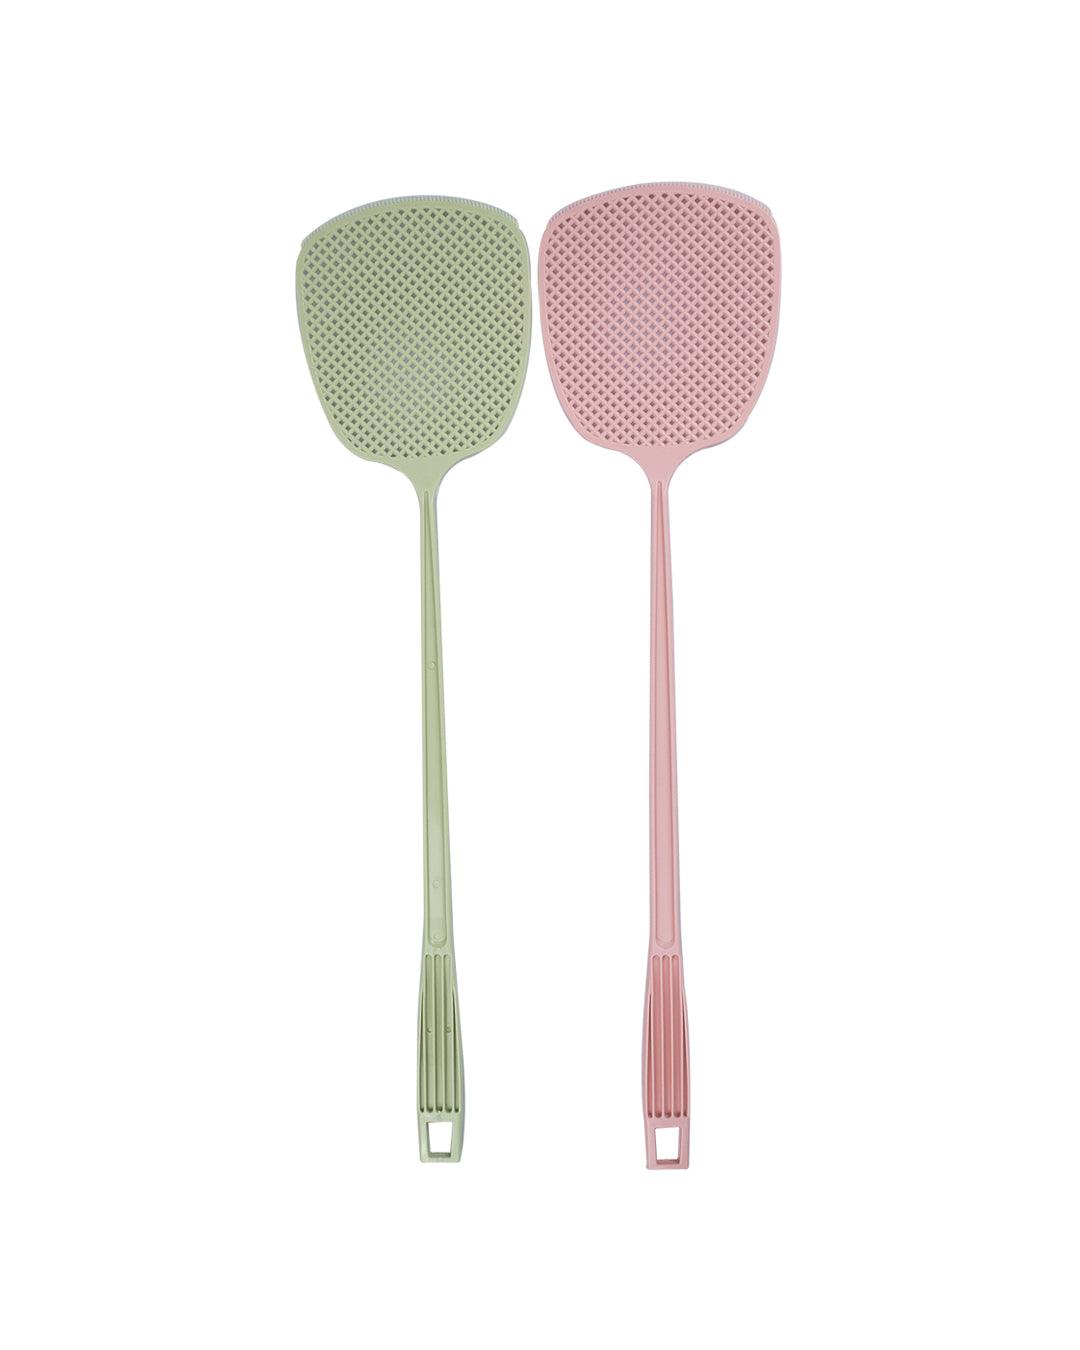 Fly Swatter, Pink & Green, Plastic, Set of 2 - MARKET 99